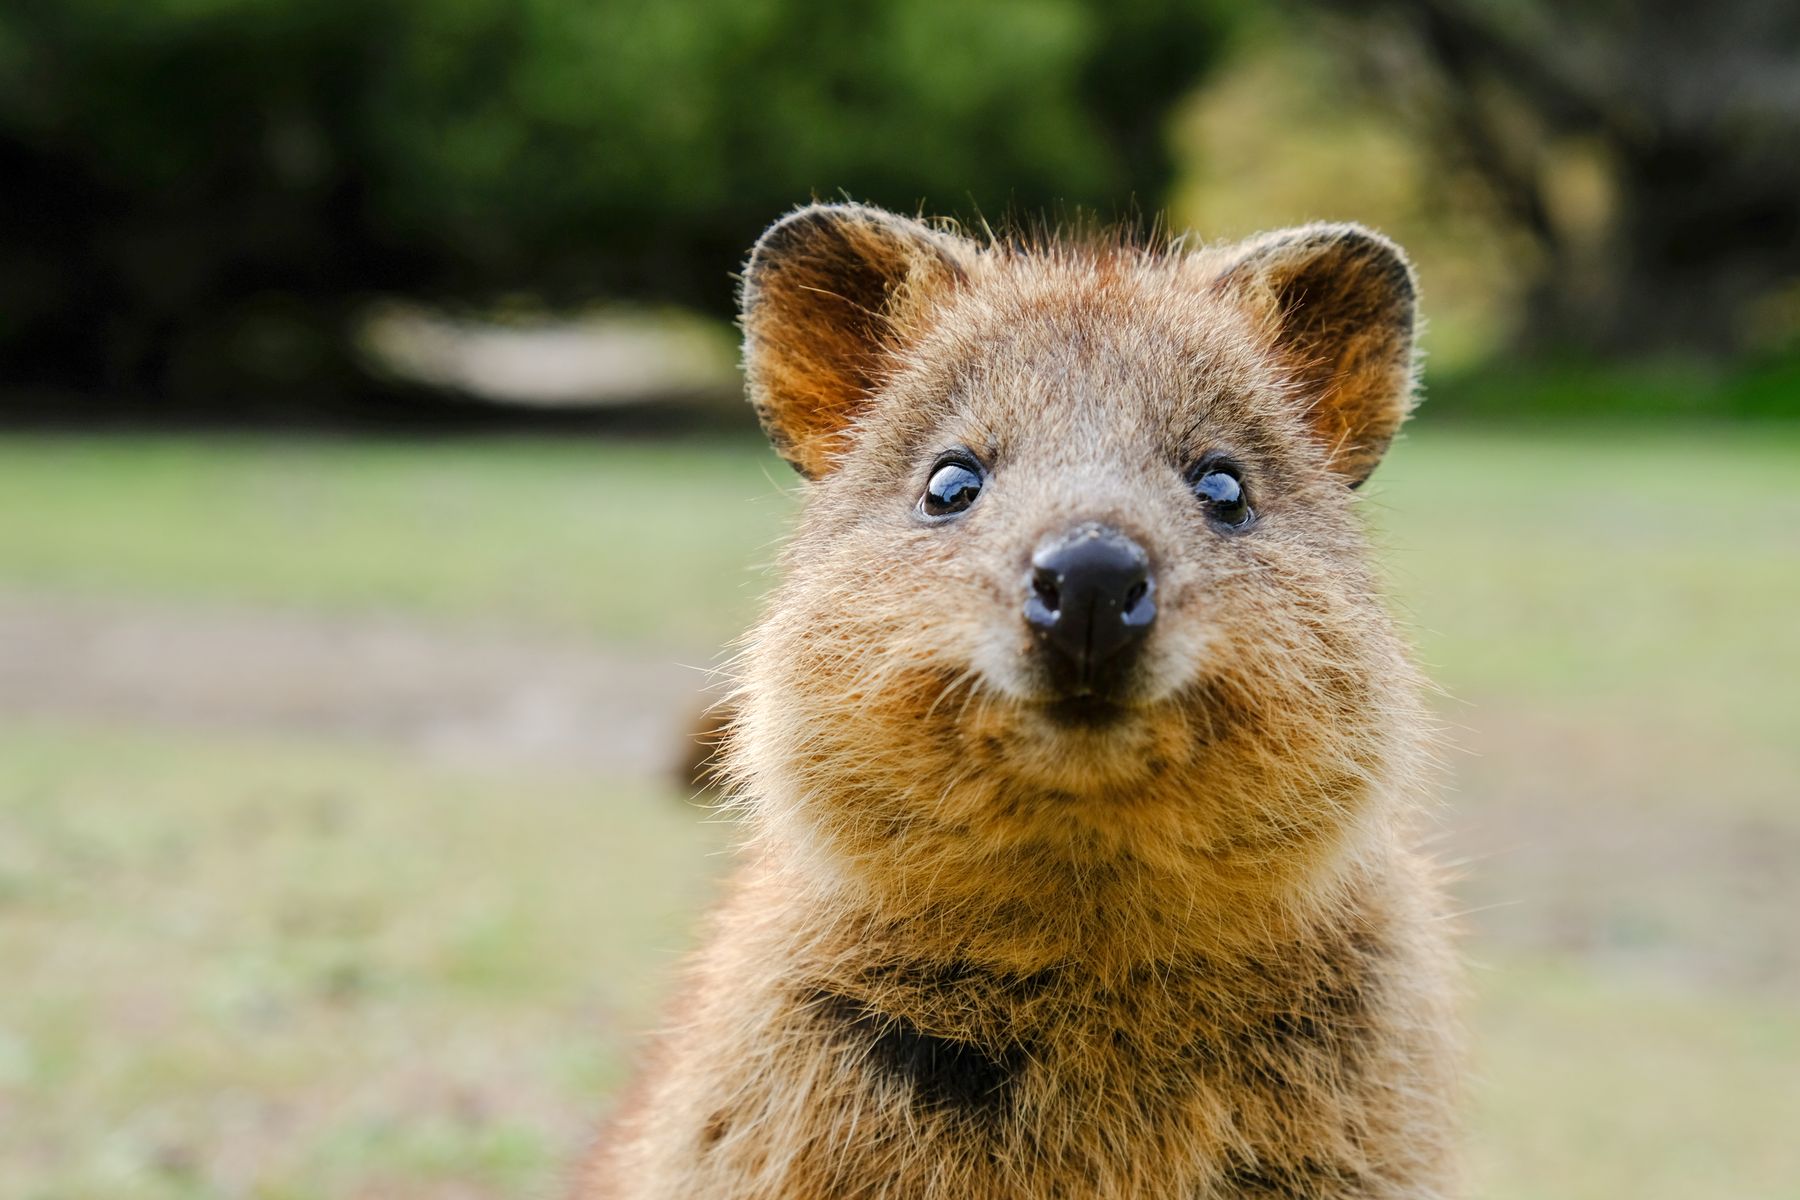 Western Australia: Meeting animals